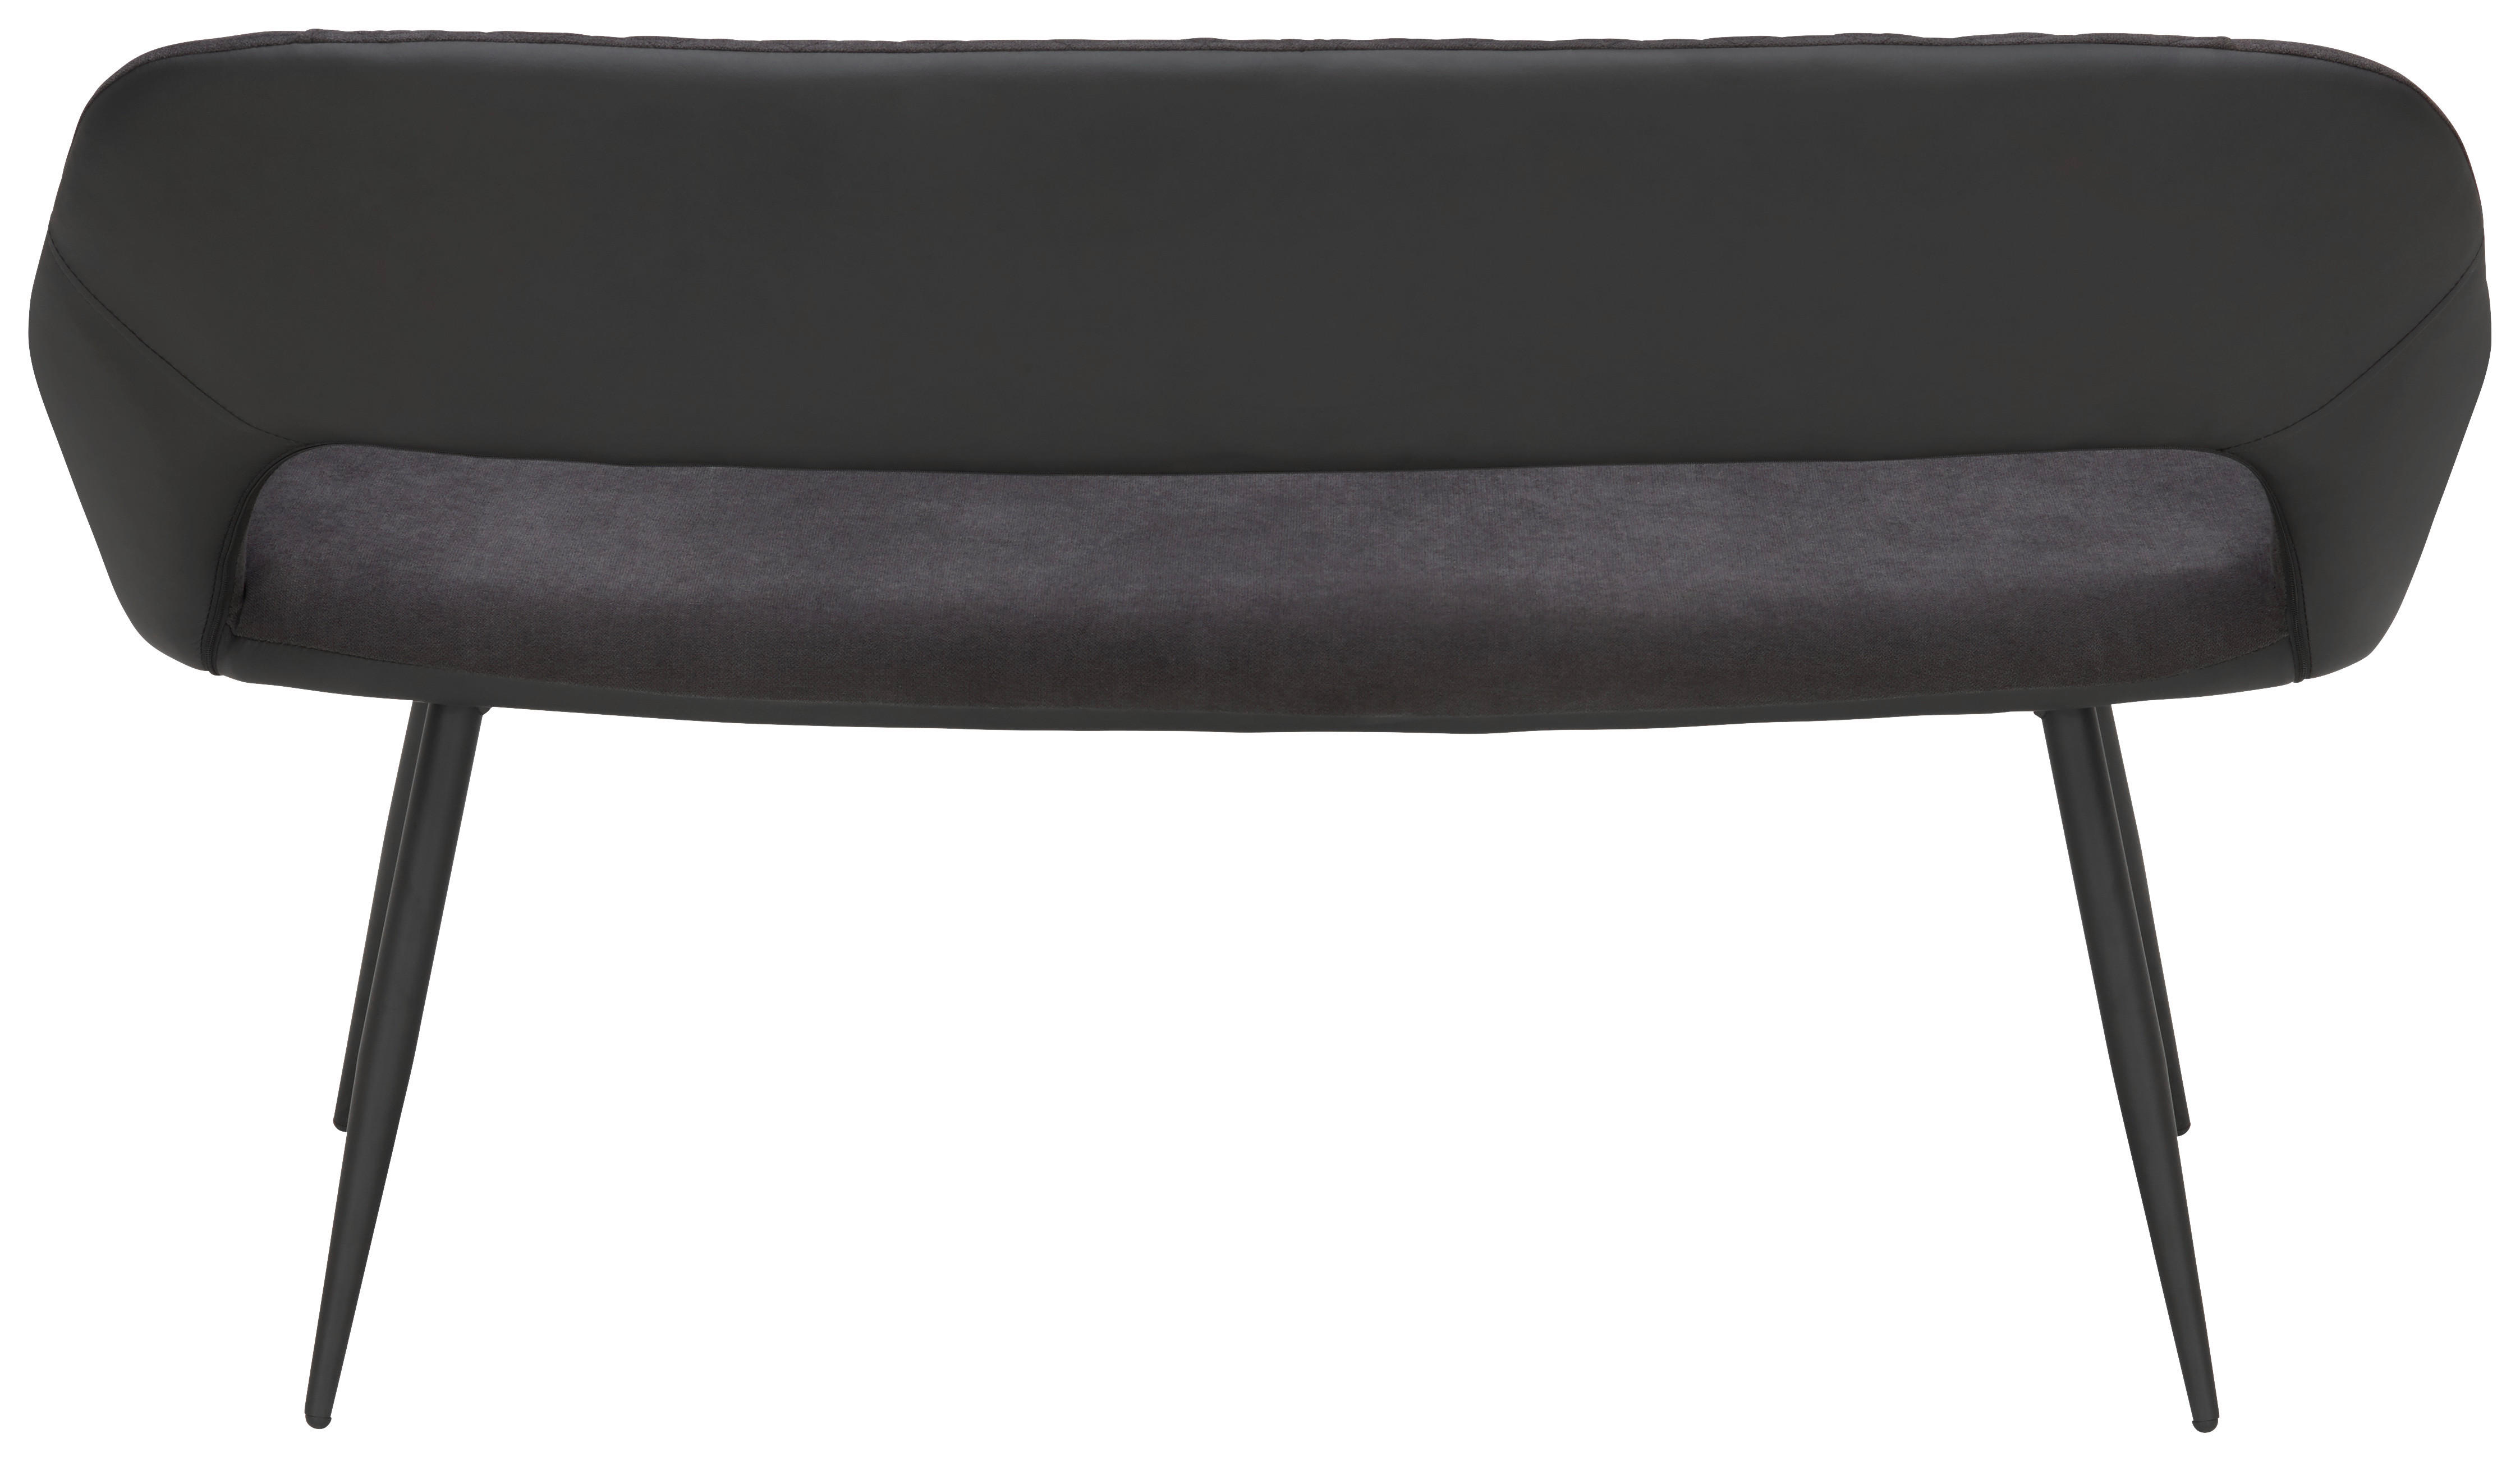 BANCĂ 140/80/62 cm  in antracit, negru  - antracit/negru, Design, metal/textil (140/80/62cm) - Carryhome